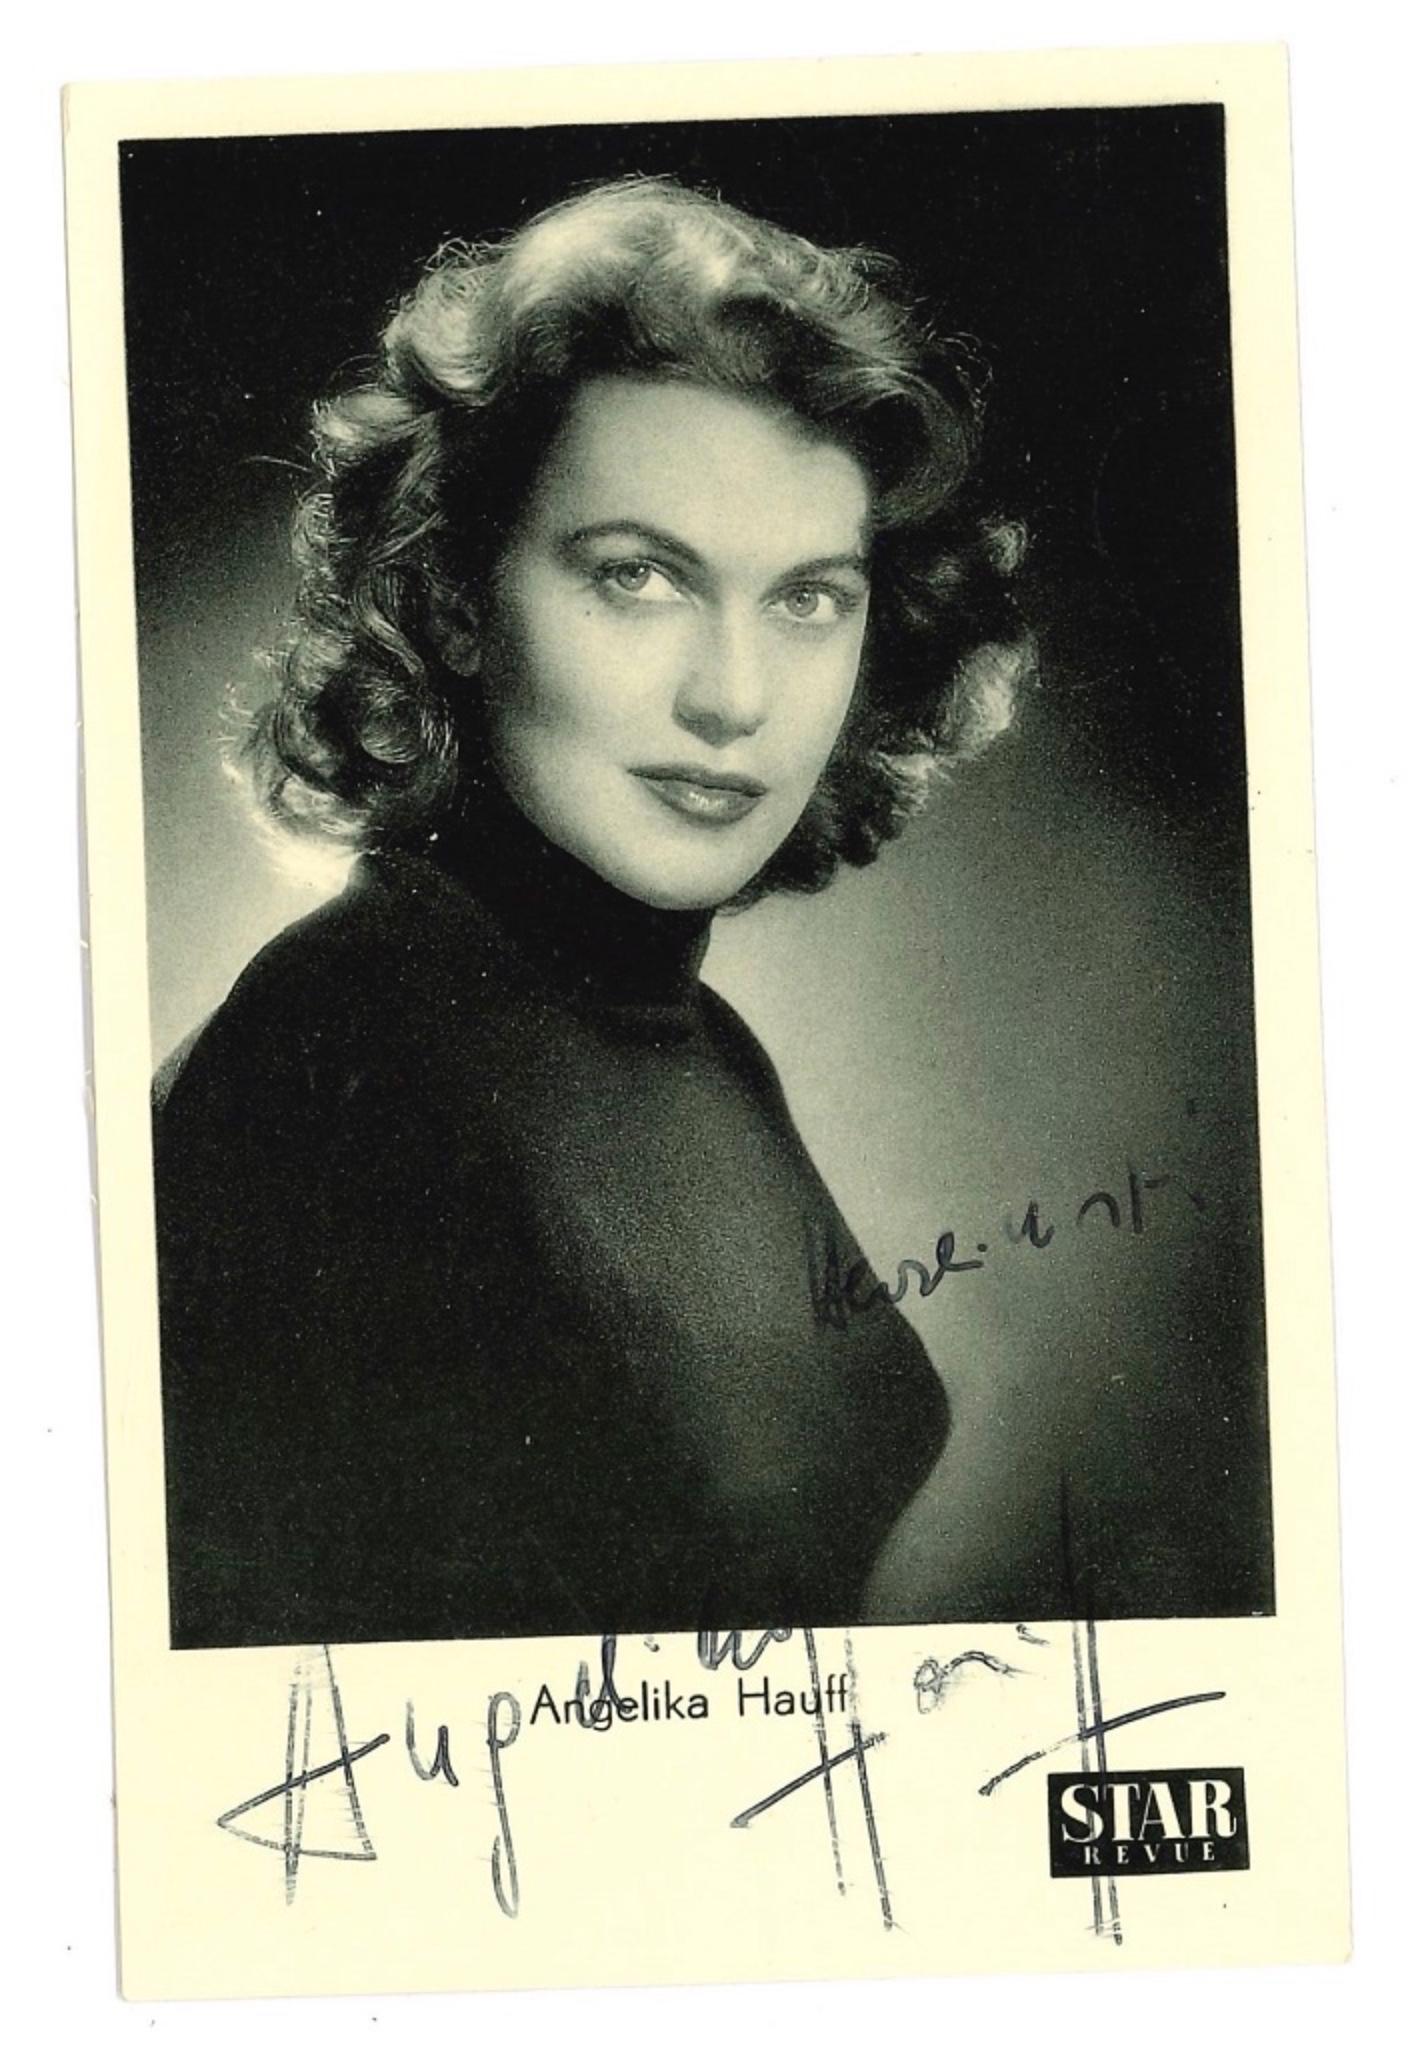 Unknown Portrait Photograph - Autographed Postcard by Angelica Hauff - 1960s